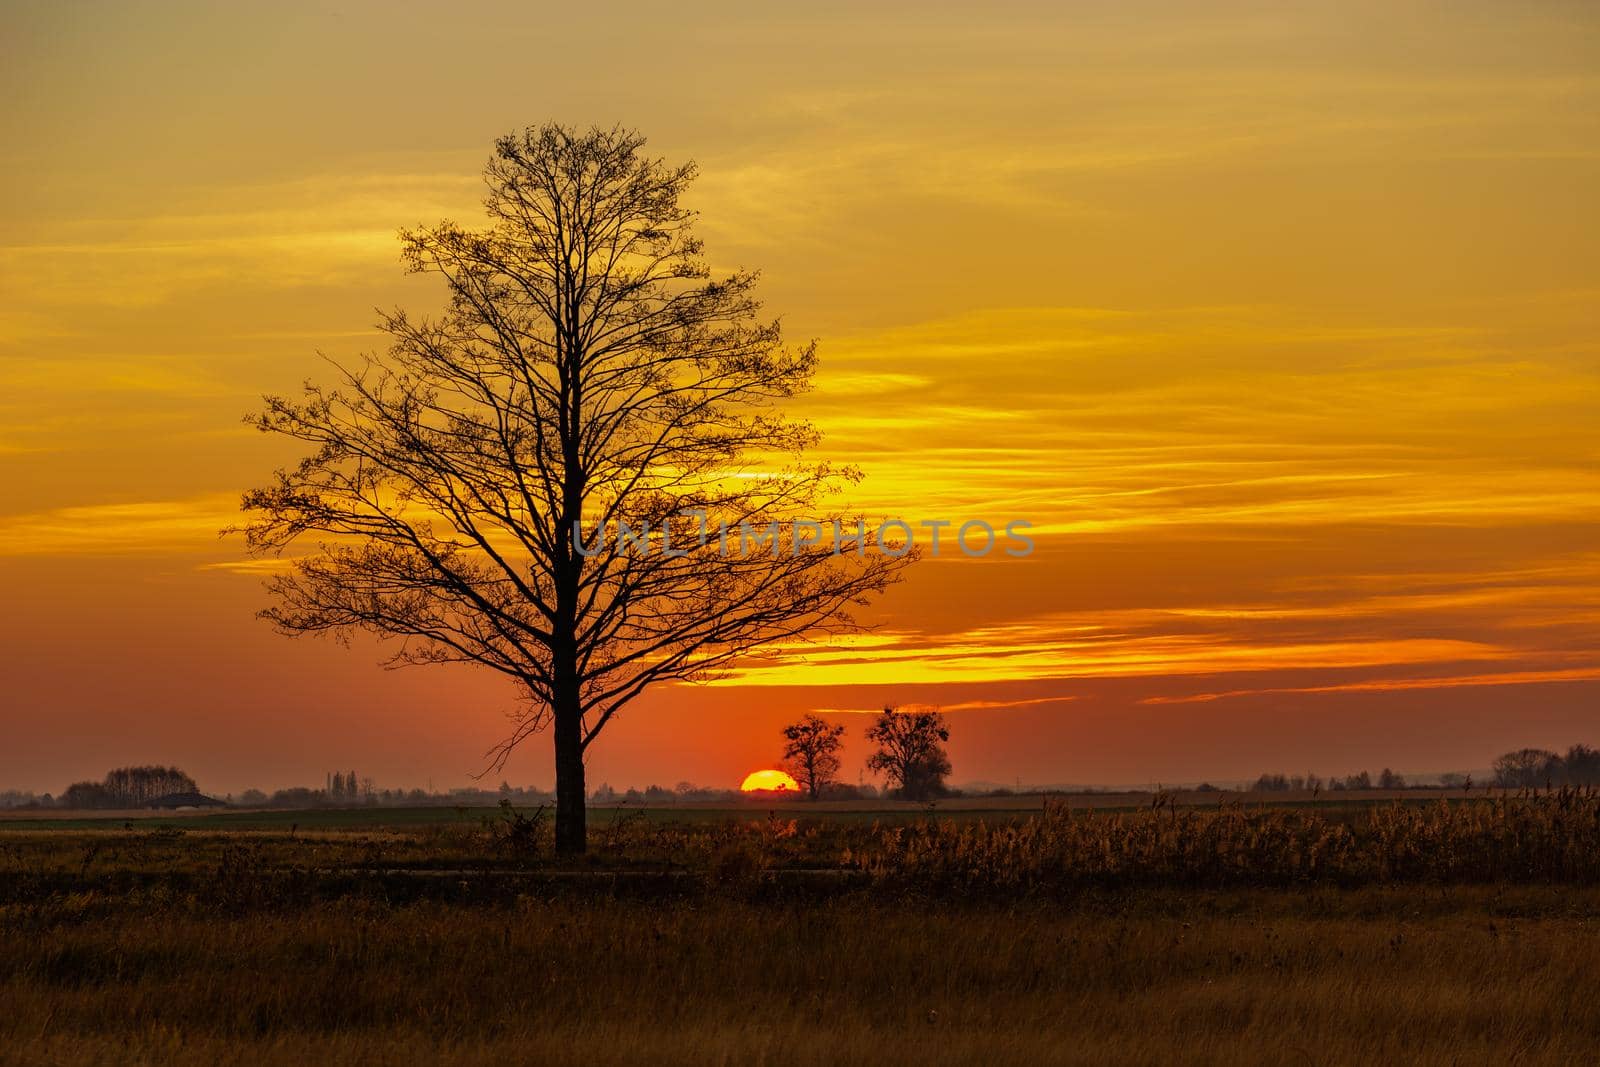 Big tree and orange sky during sunset by darekb22